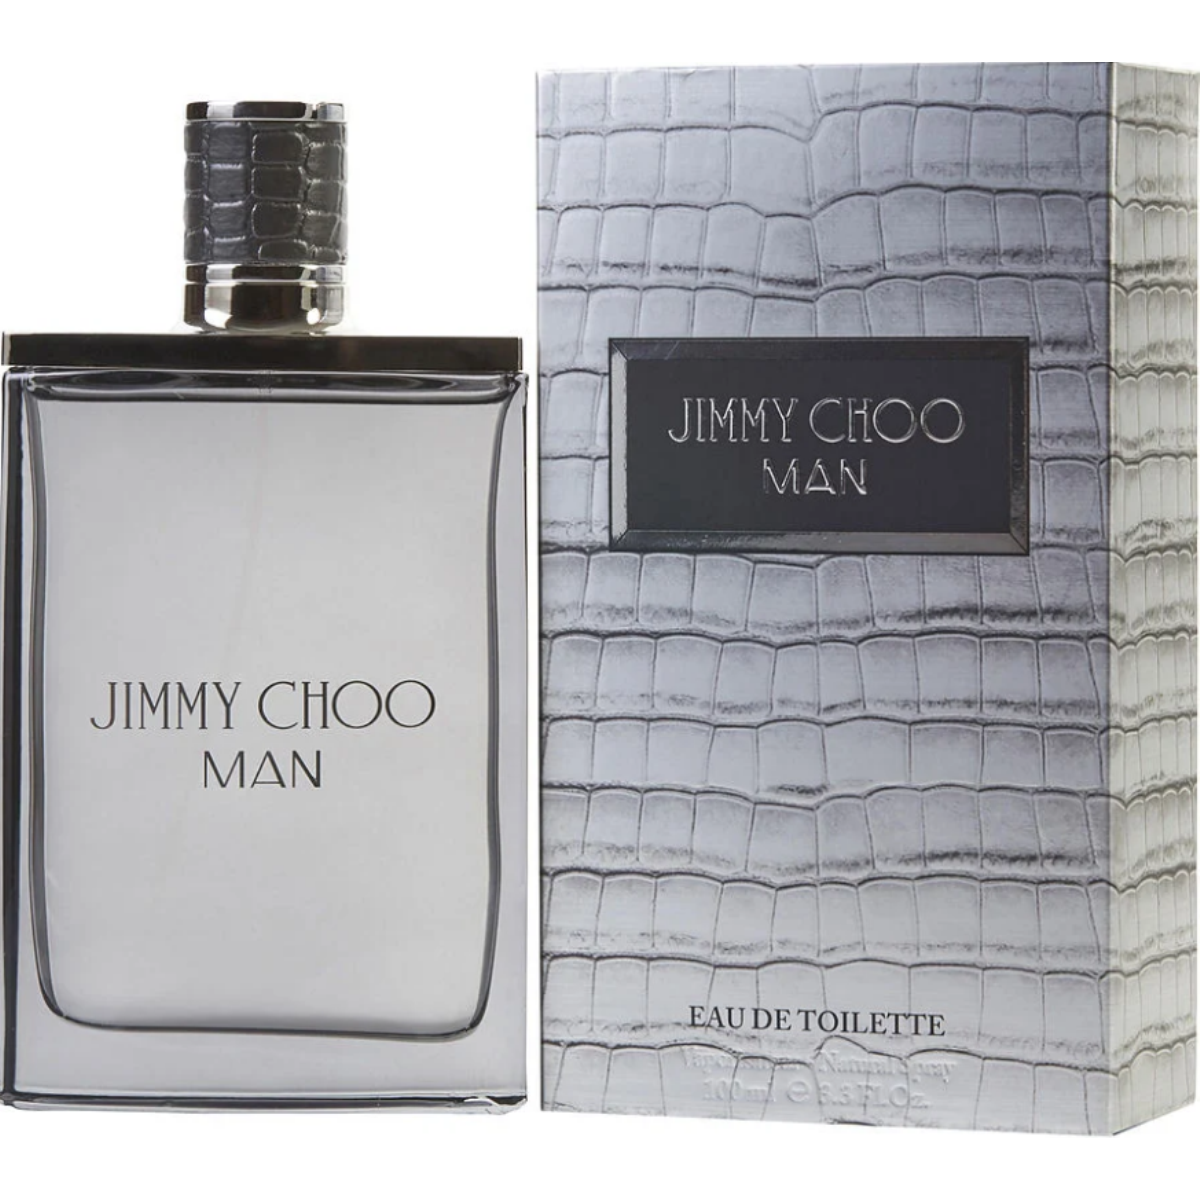 Jimmy Choo Man 3.4 / 3.3 oz EDT Cologne